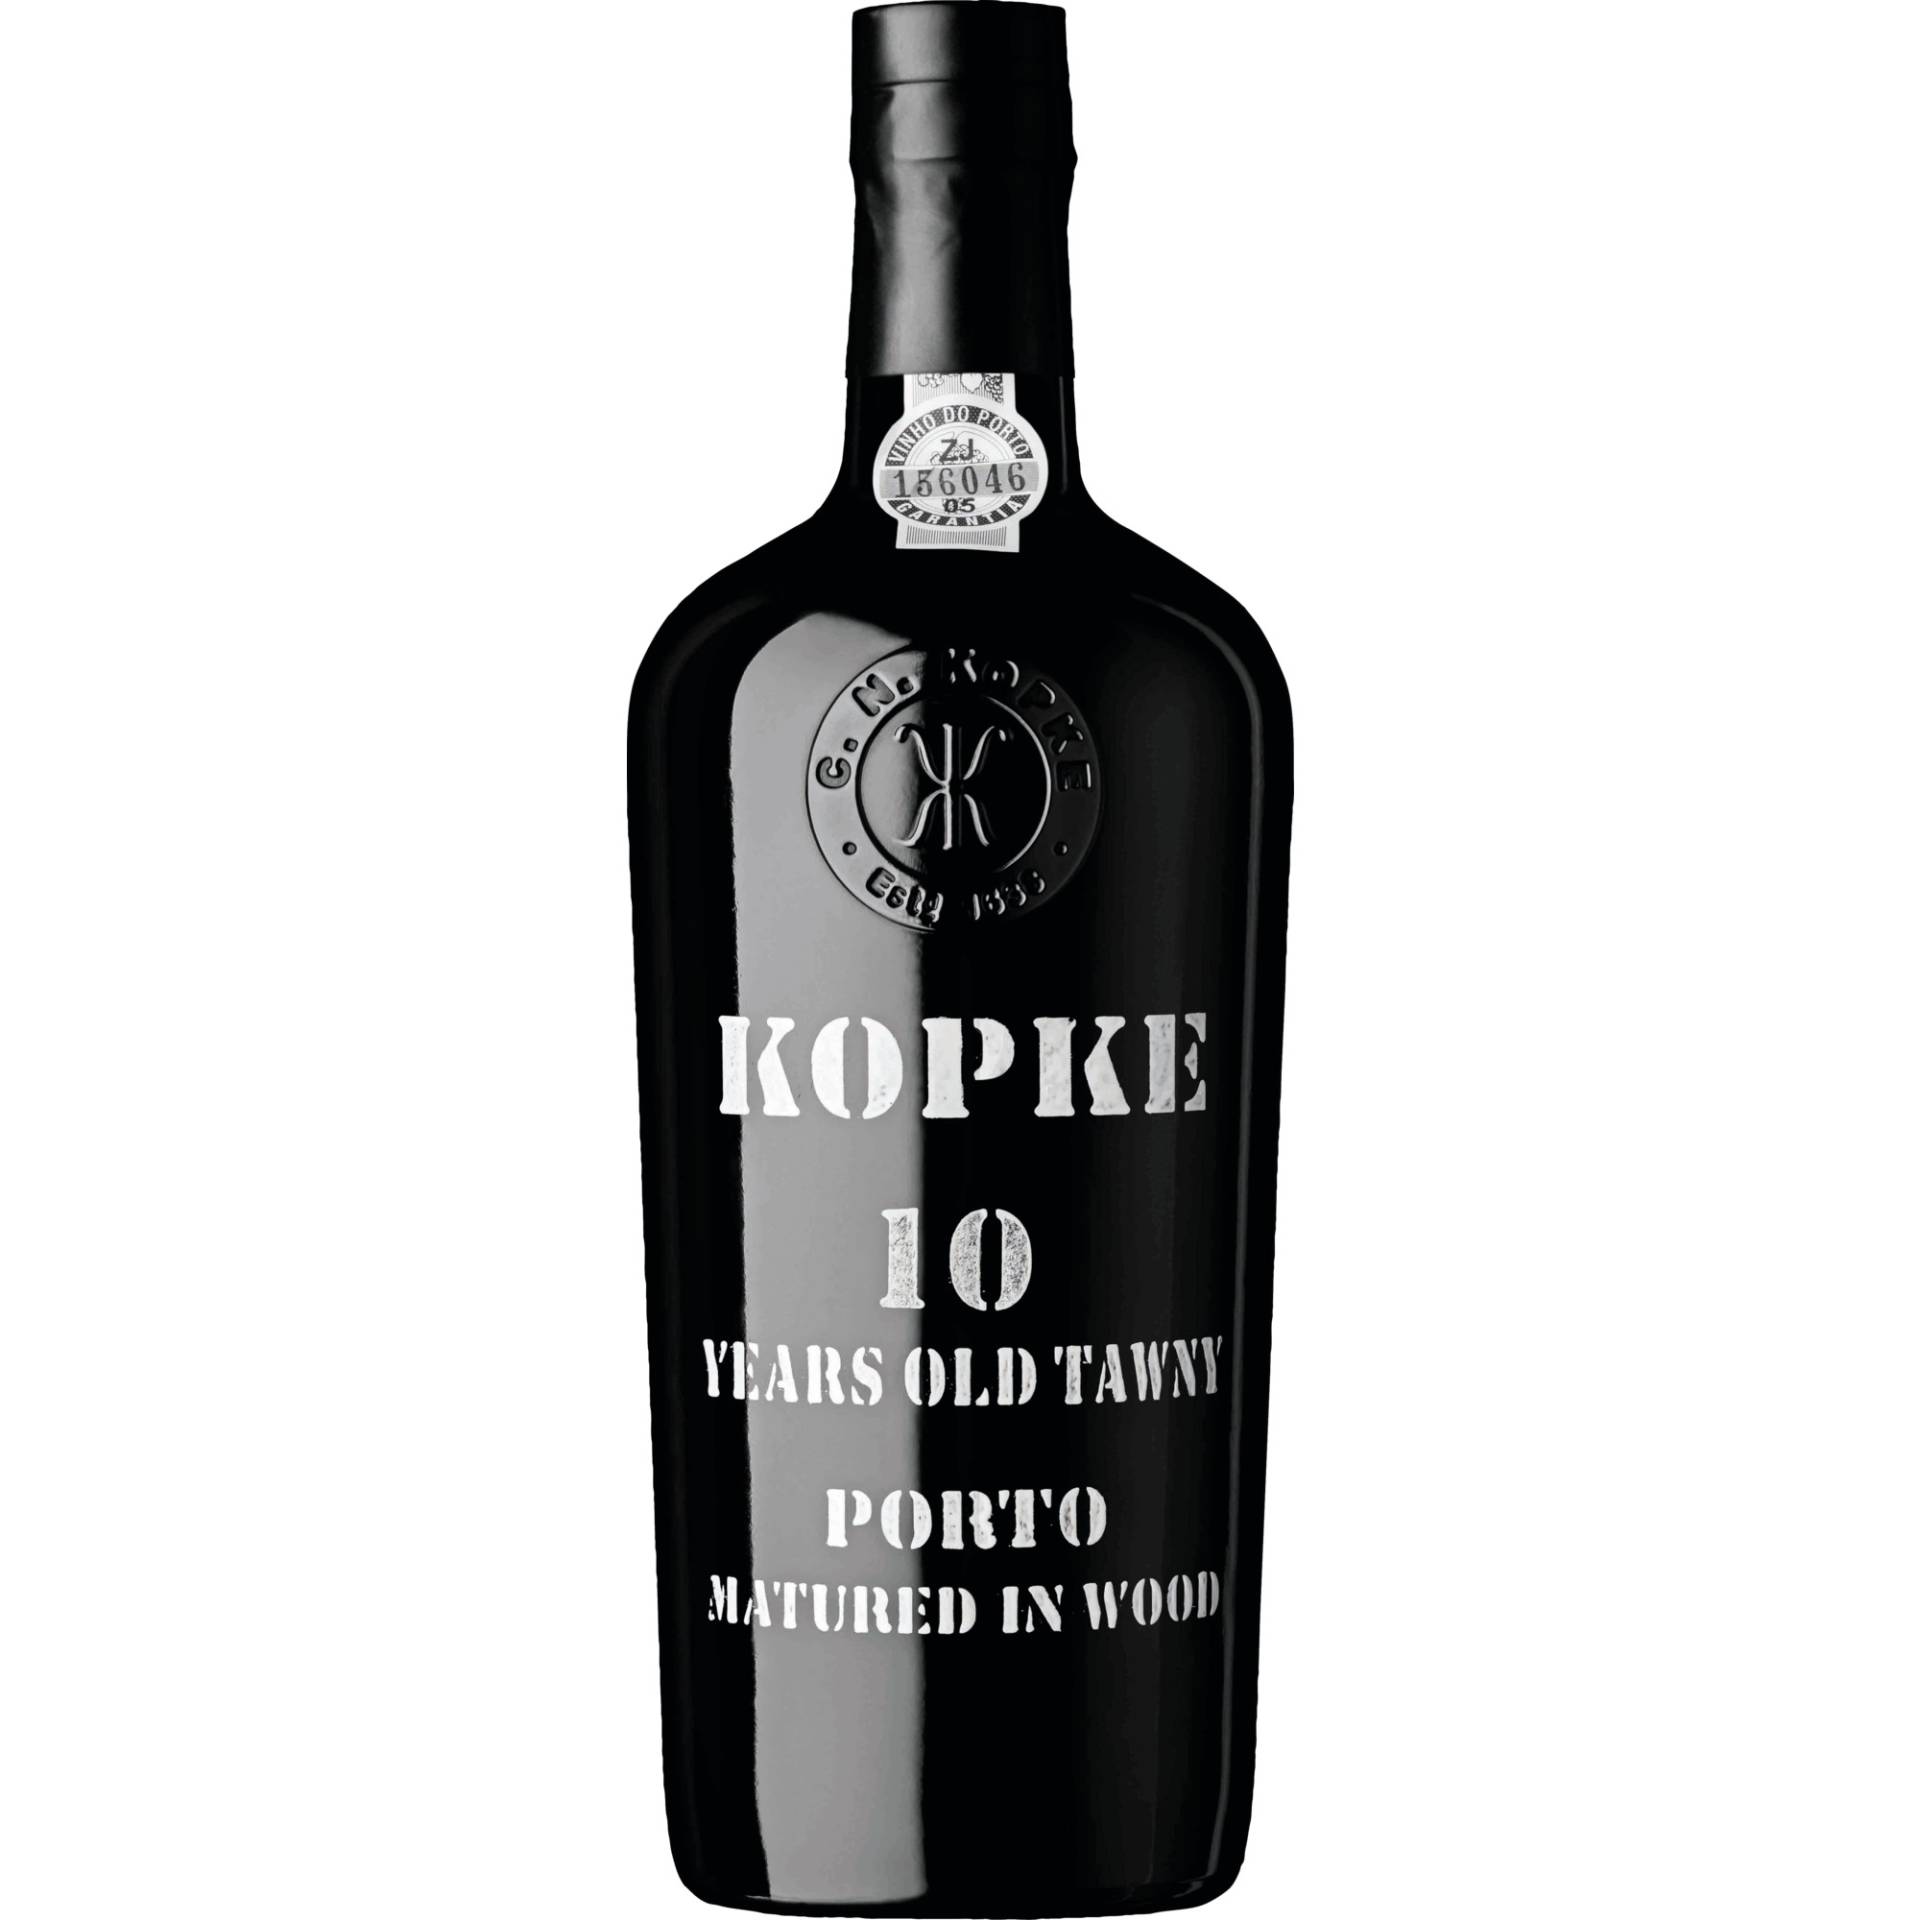 Kopke 10 Years Old Tawny Port, Vinho do Porto DOC, 0,75 L, 20% Vol., Douro, Spirituosen von C.N. Kopke & Ca Lda. Rua Serpa Pinto 183-191, P-4431-901 Vila Nova de Gaia Portugal